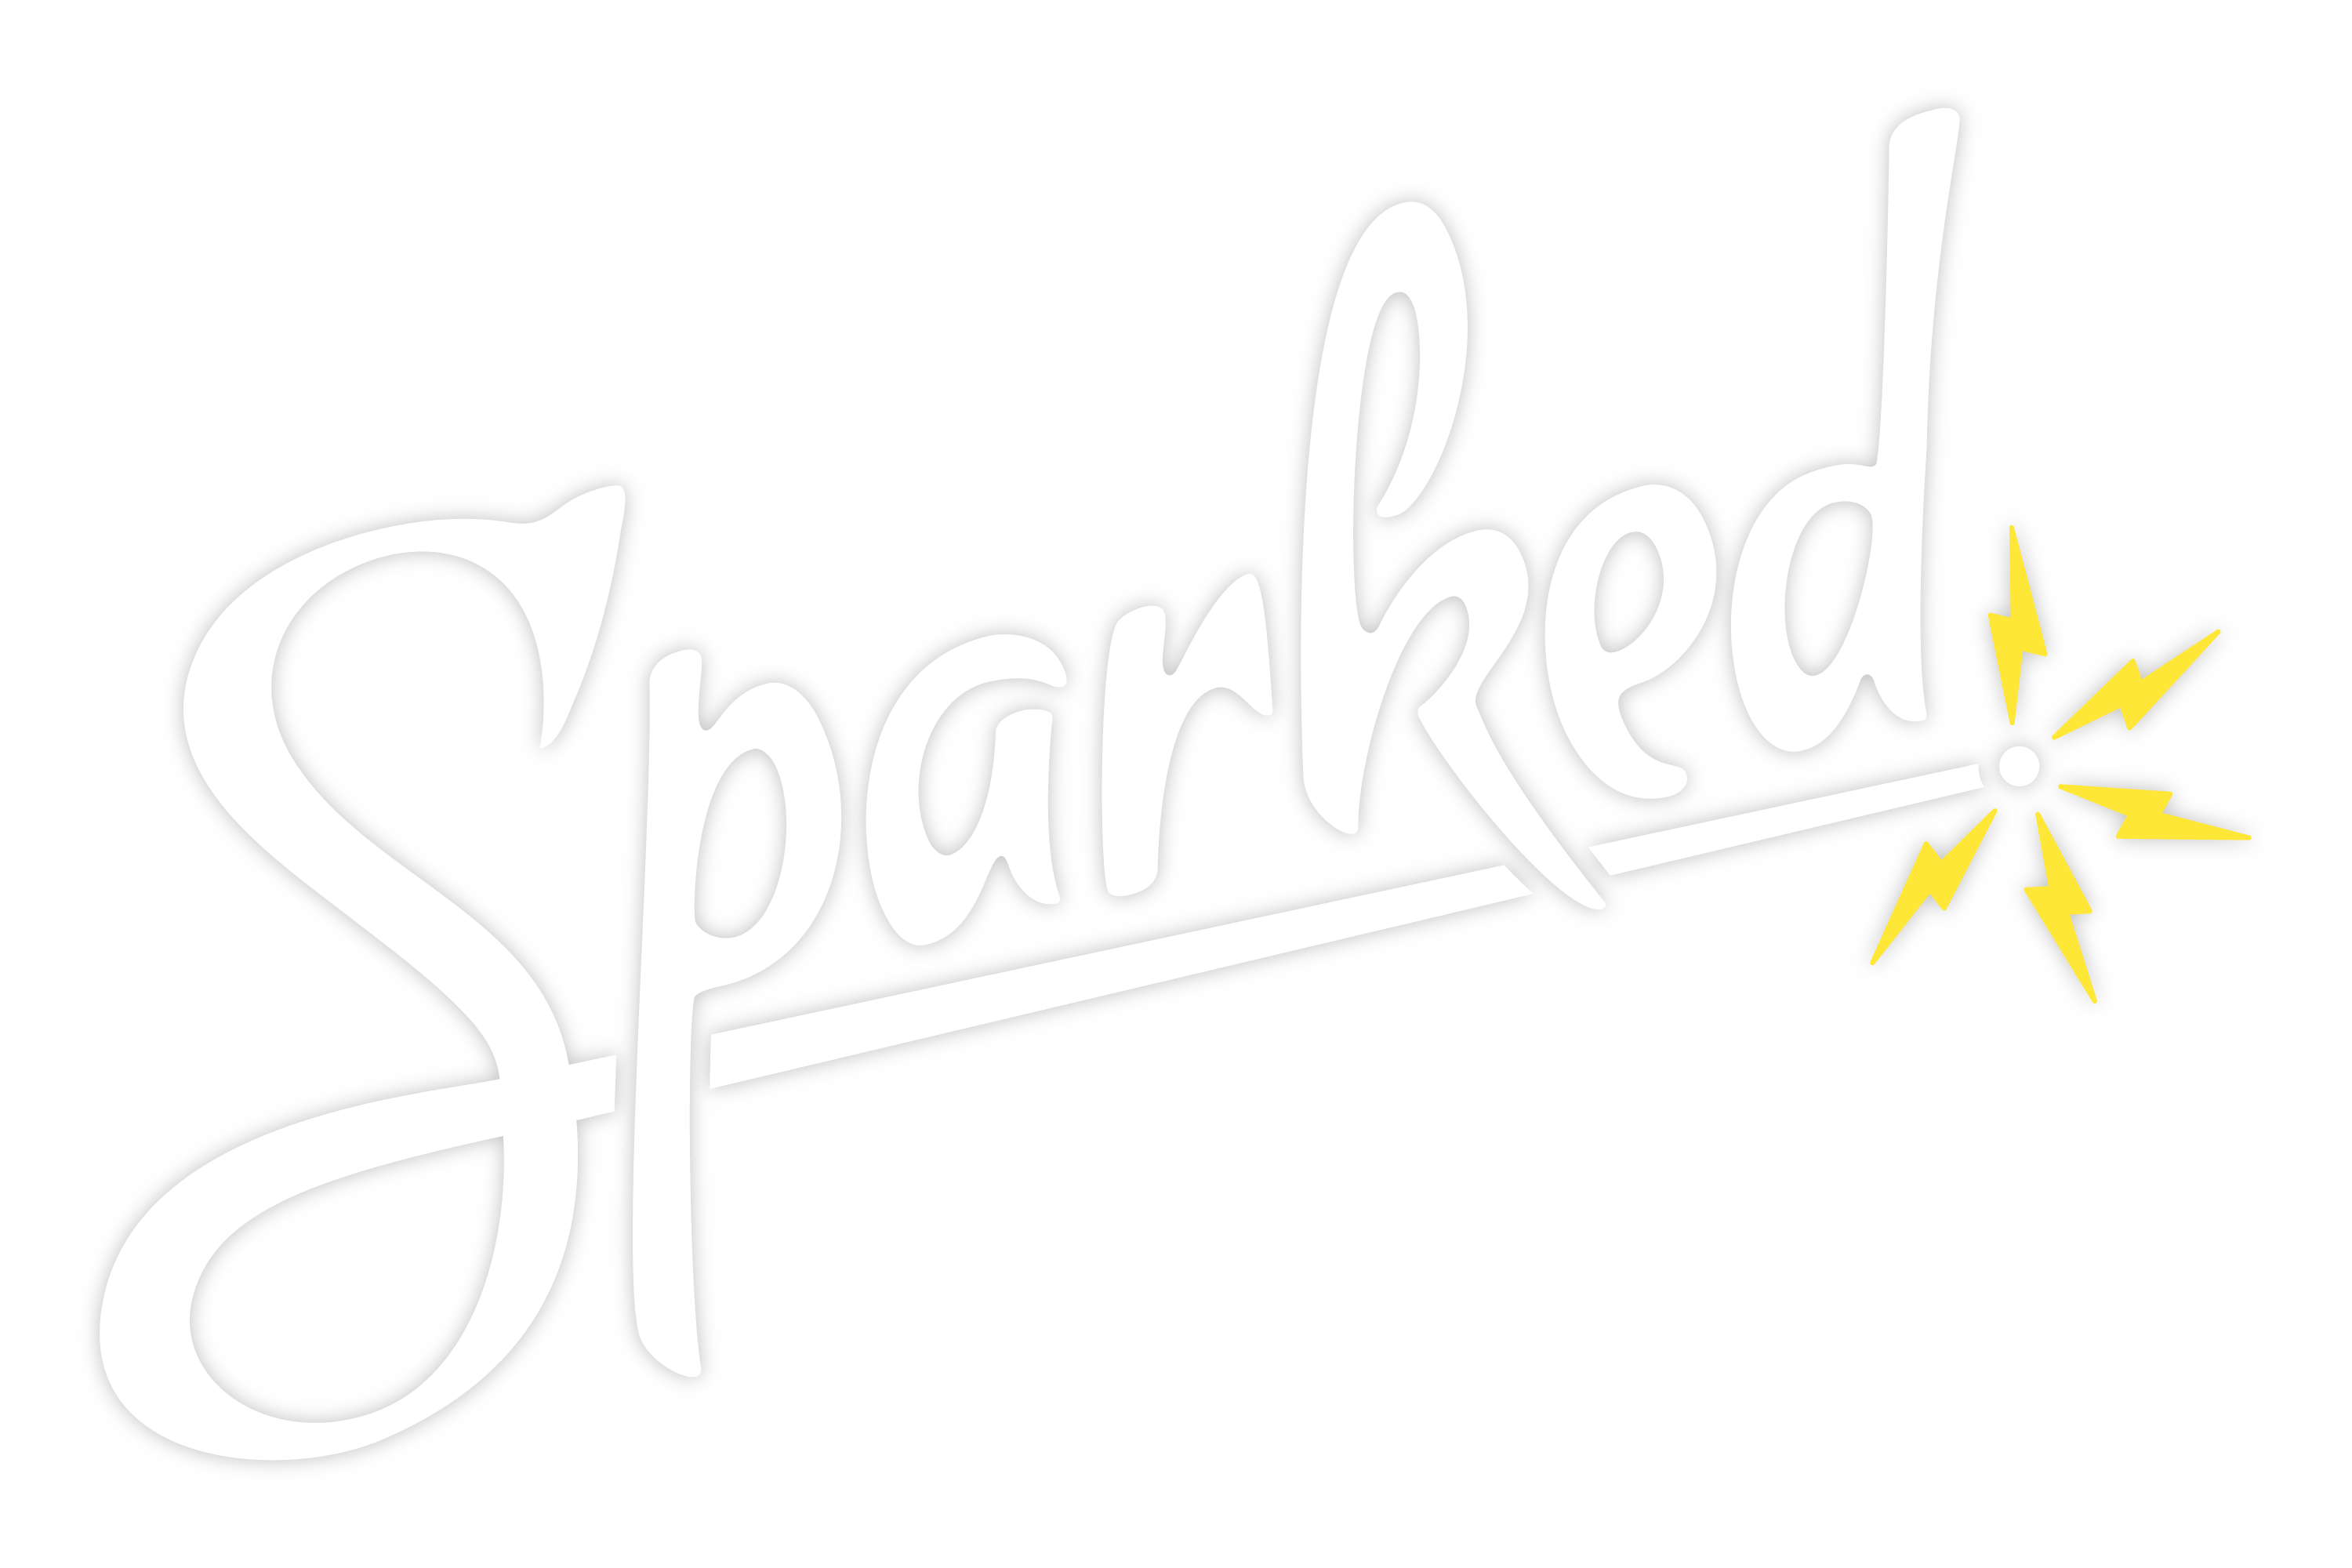 Sparked Podcast logo